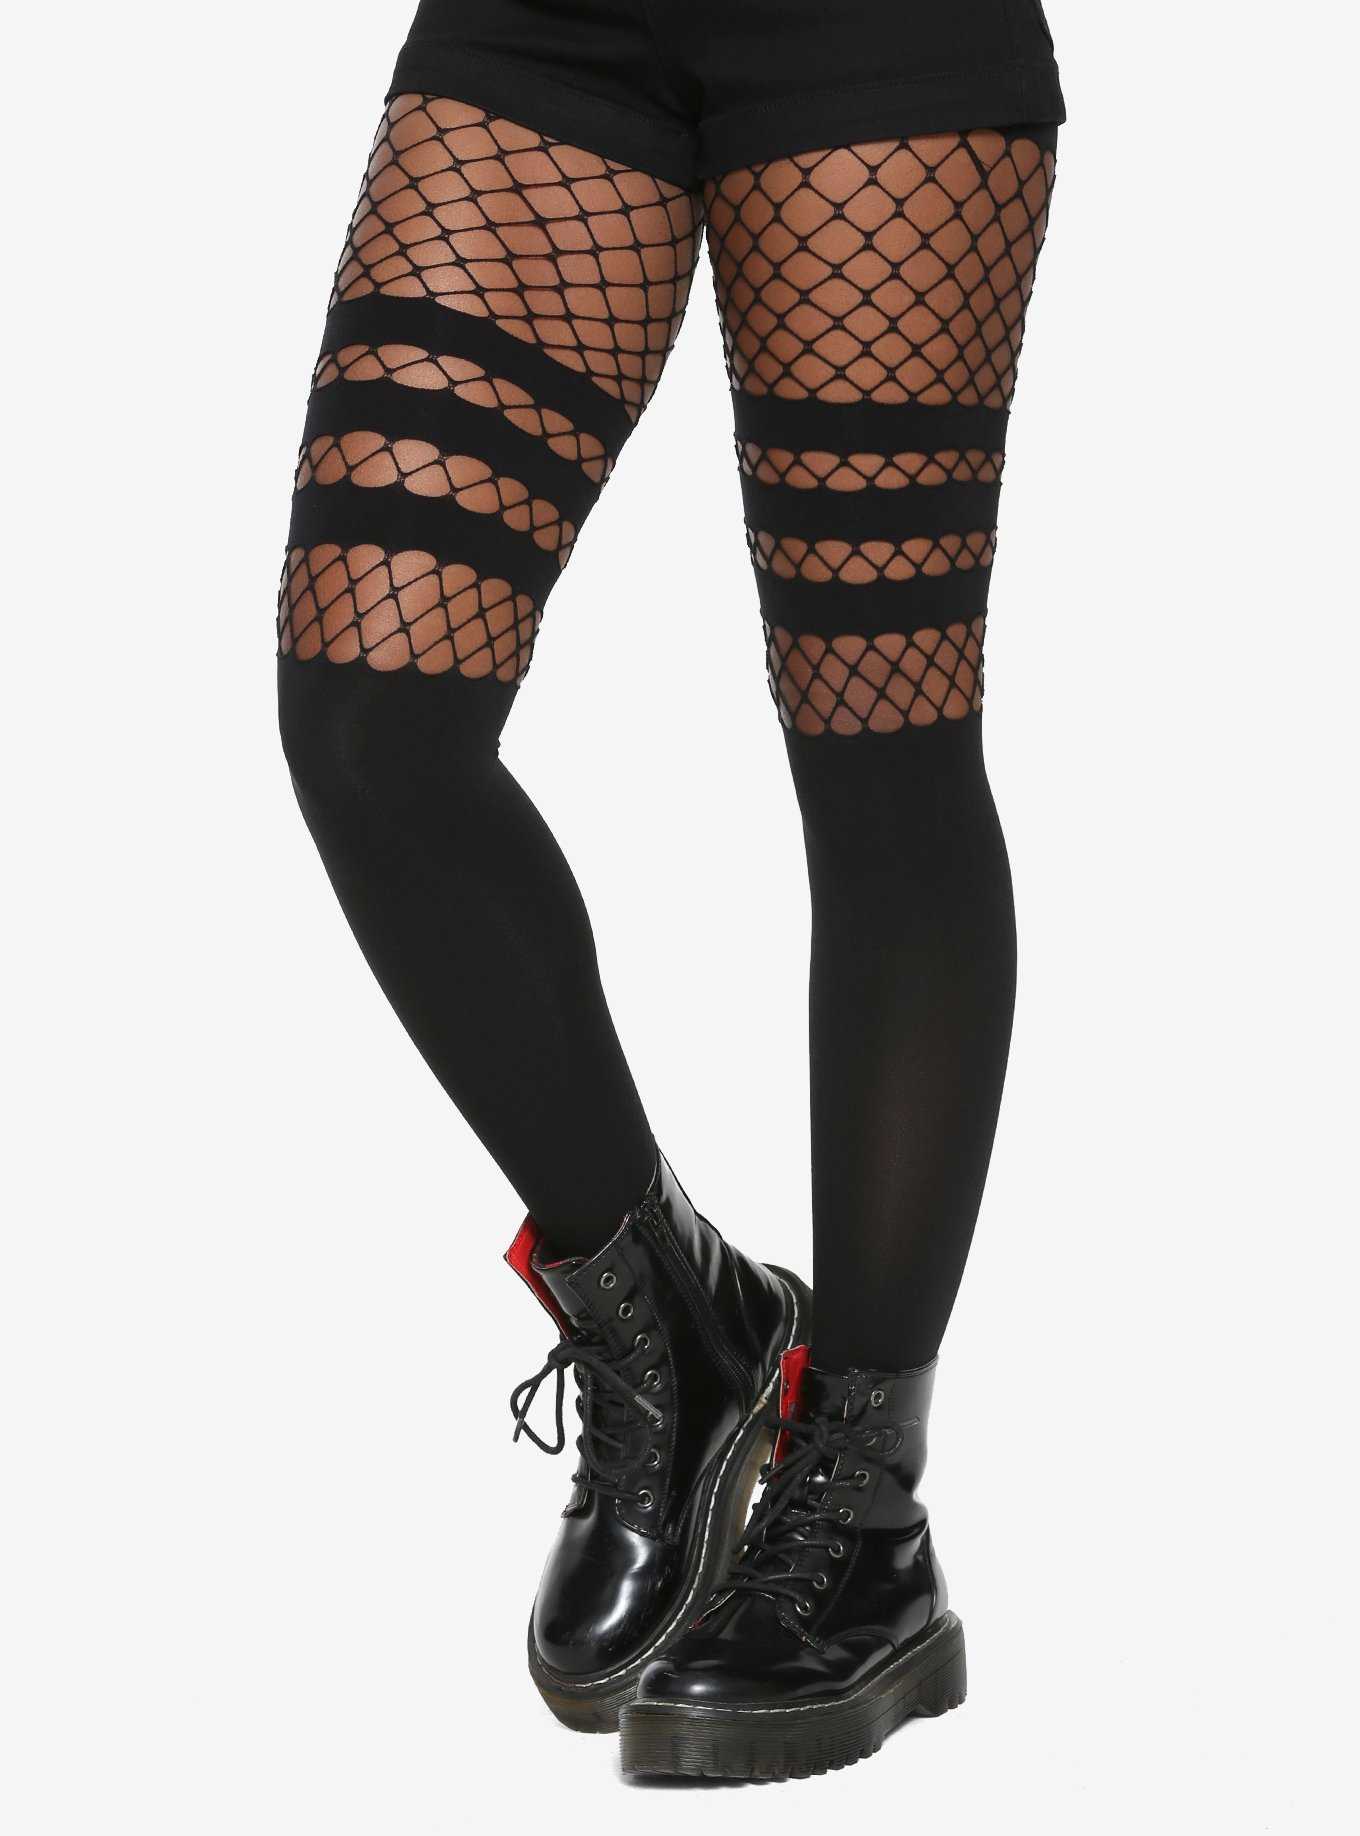 Matrix Black Striped Leggings (Custom-Made)